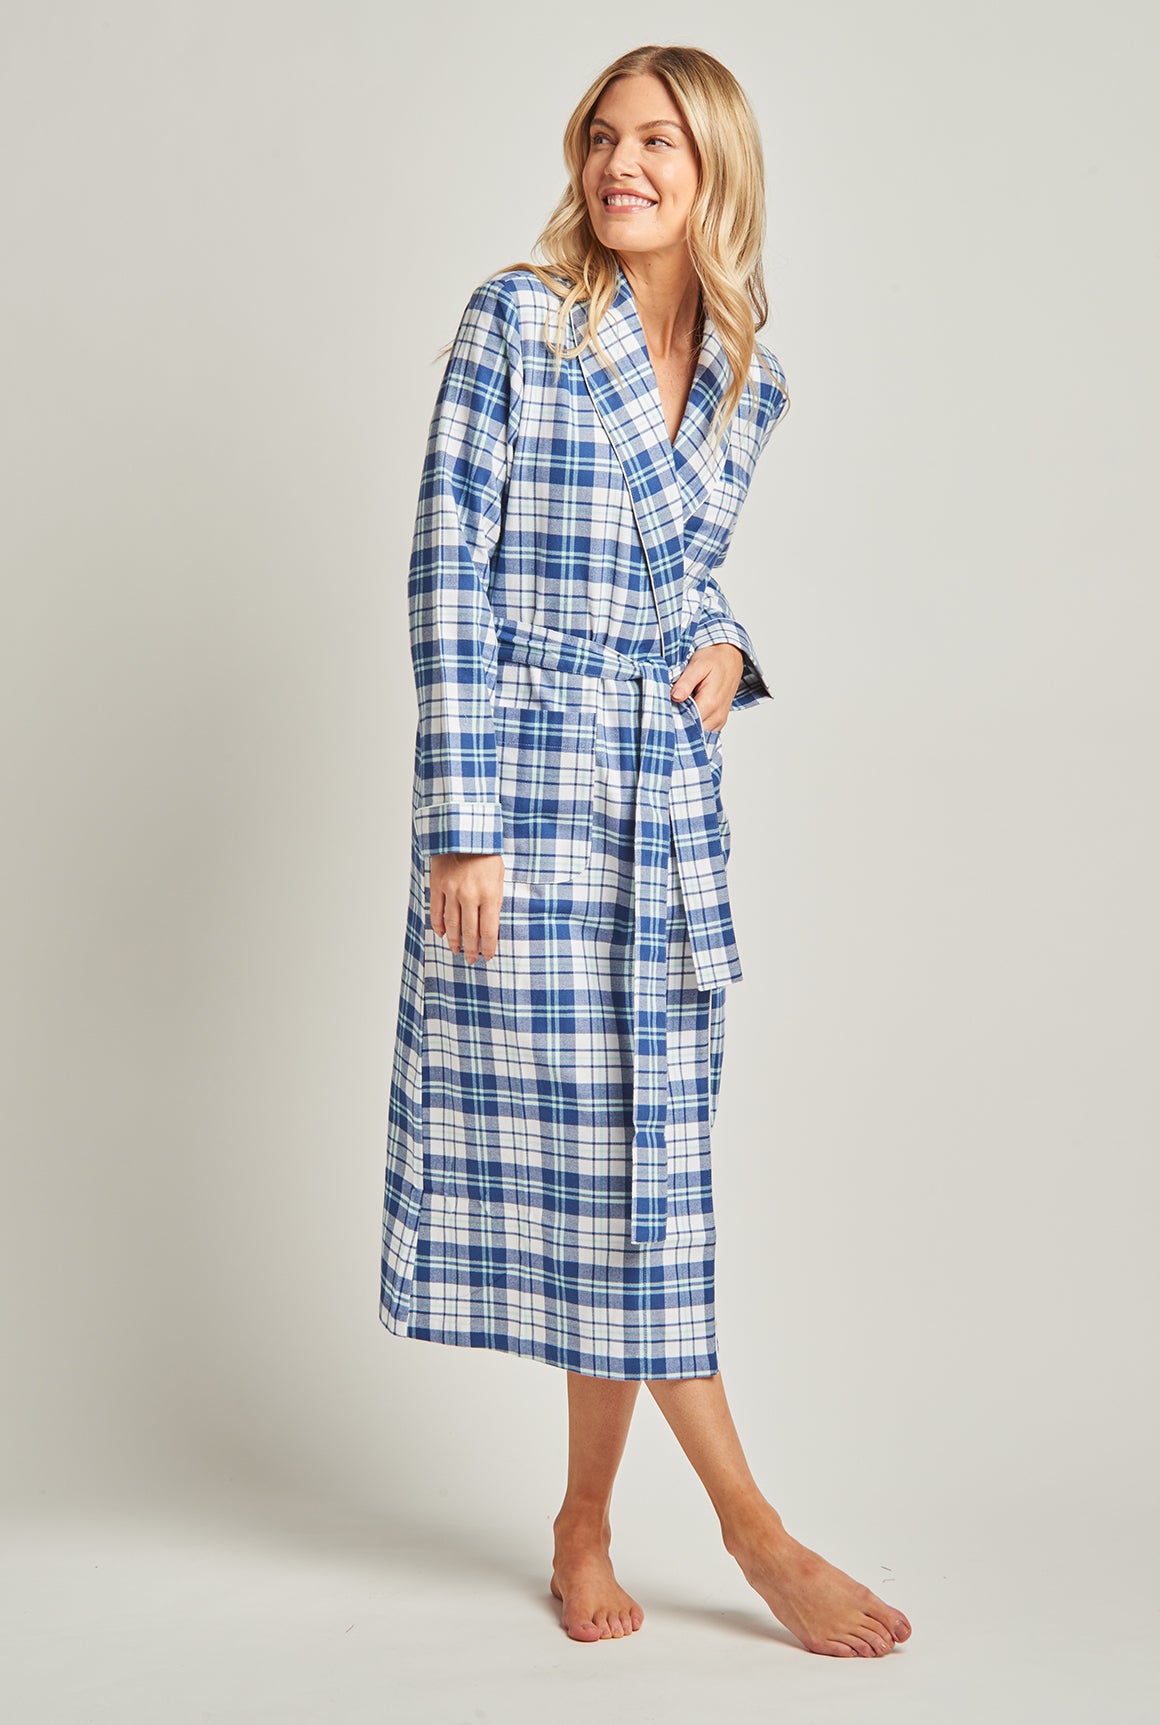 Brushed Cotton Flannel Robe, Nightwear & Robes Sale